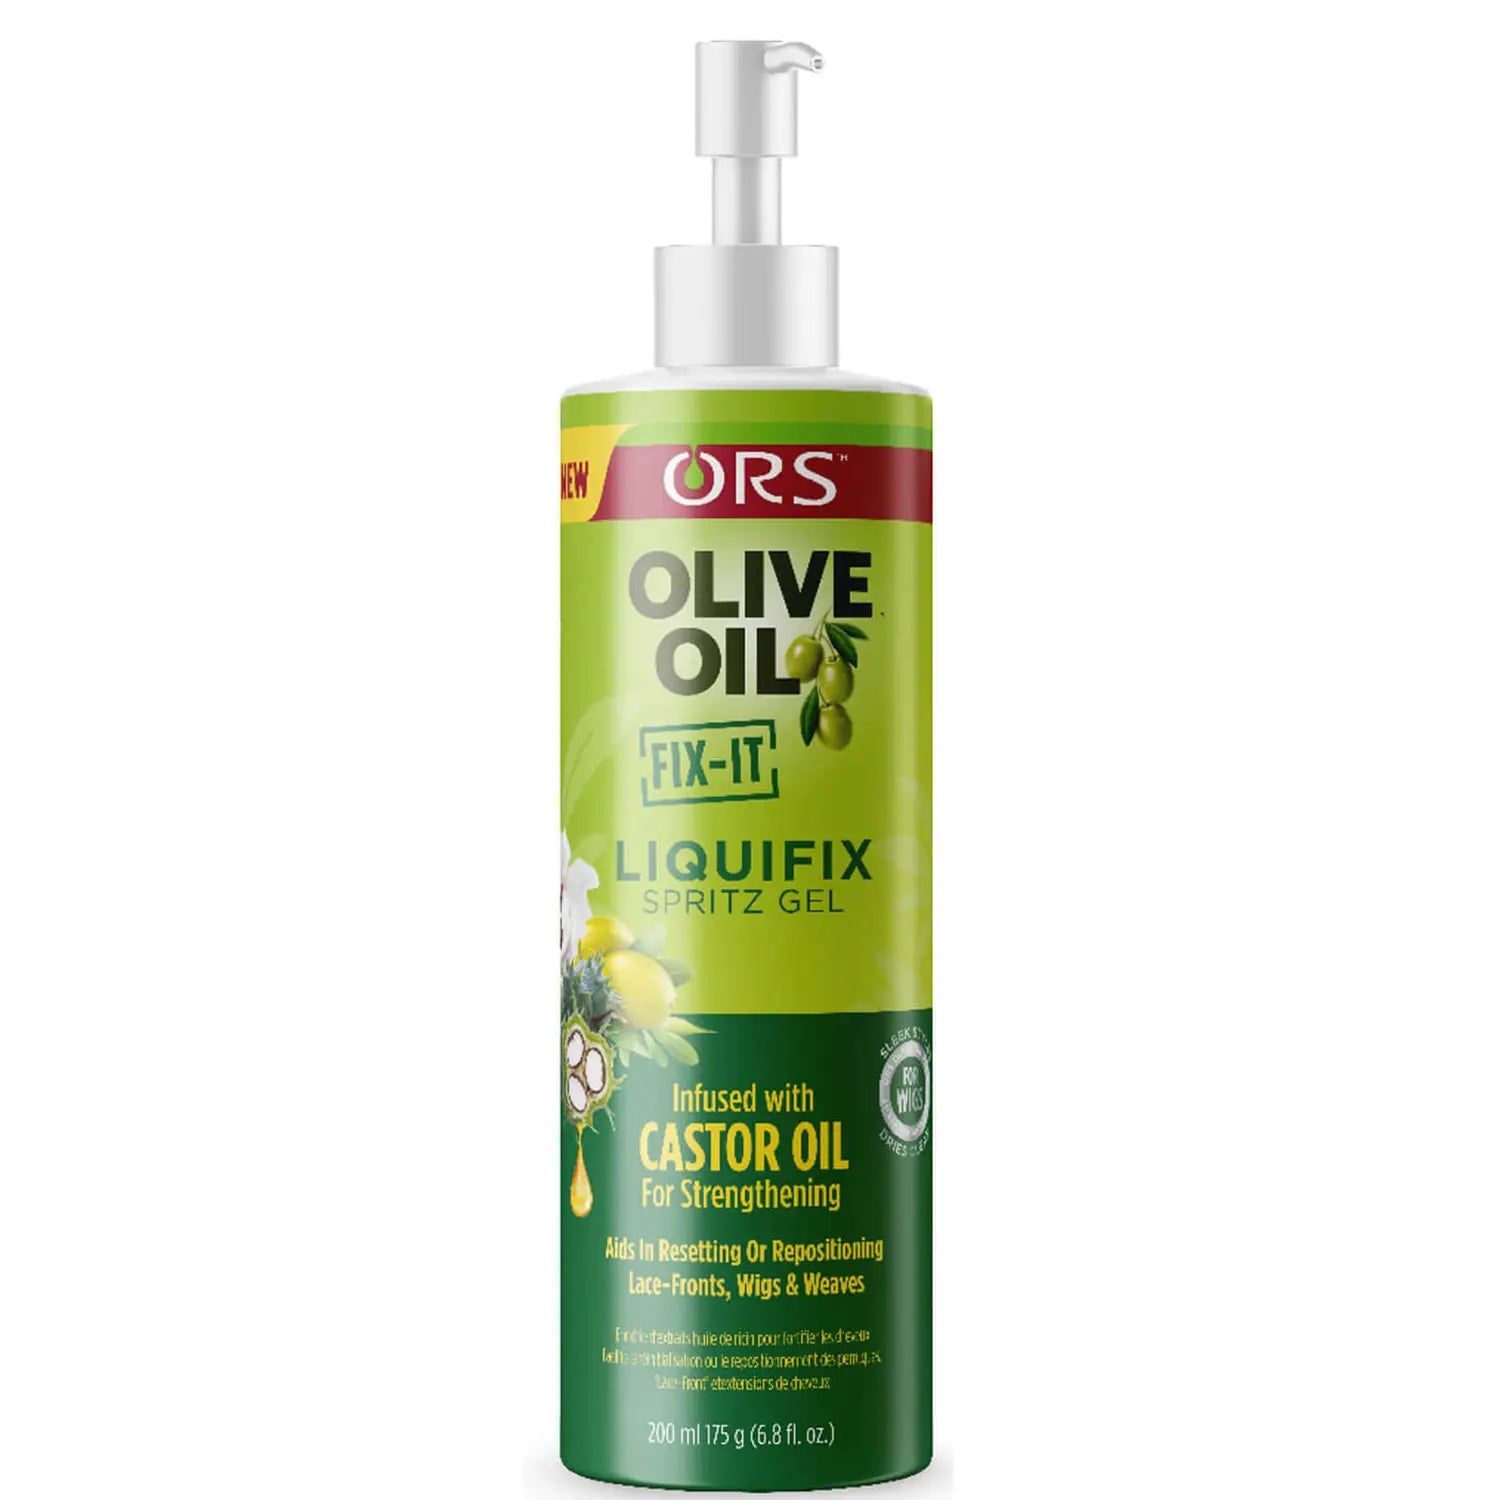 ORS Olive Oil Fix-it Liquifix Spritz Gel